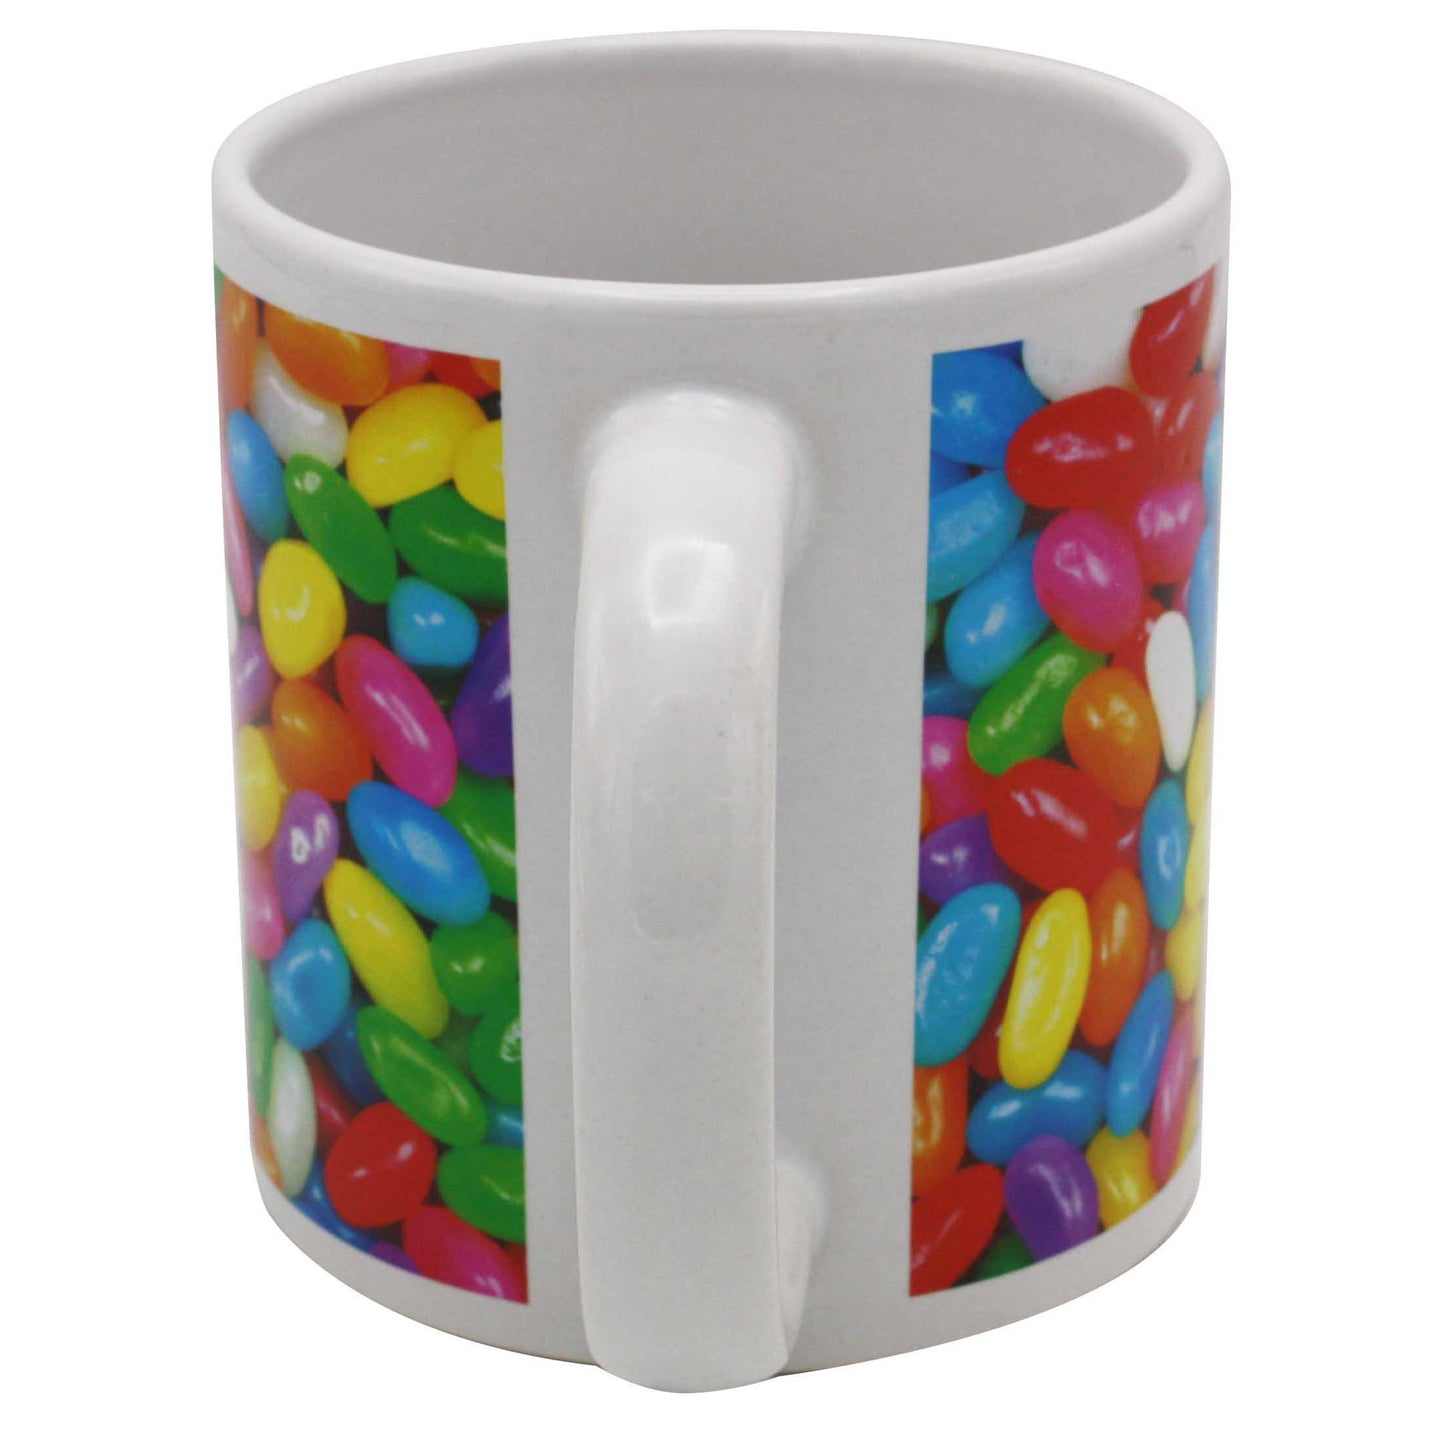 Giant Jelly Beans Mug